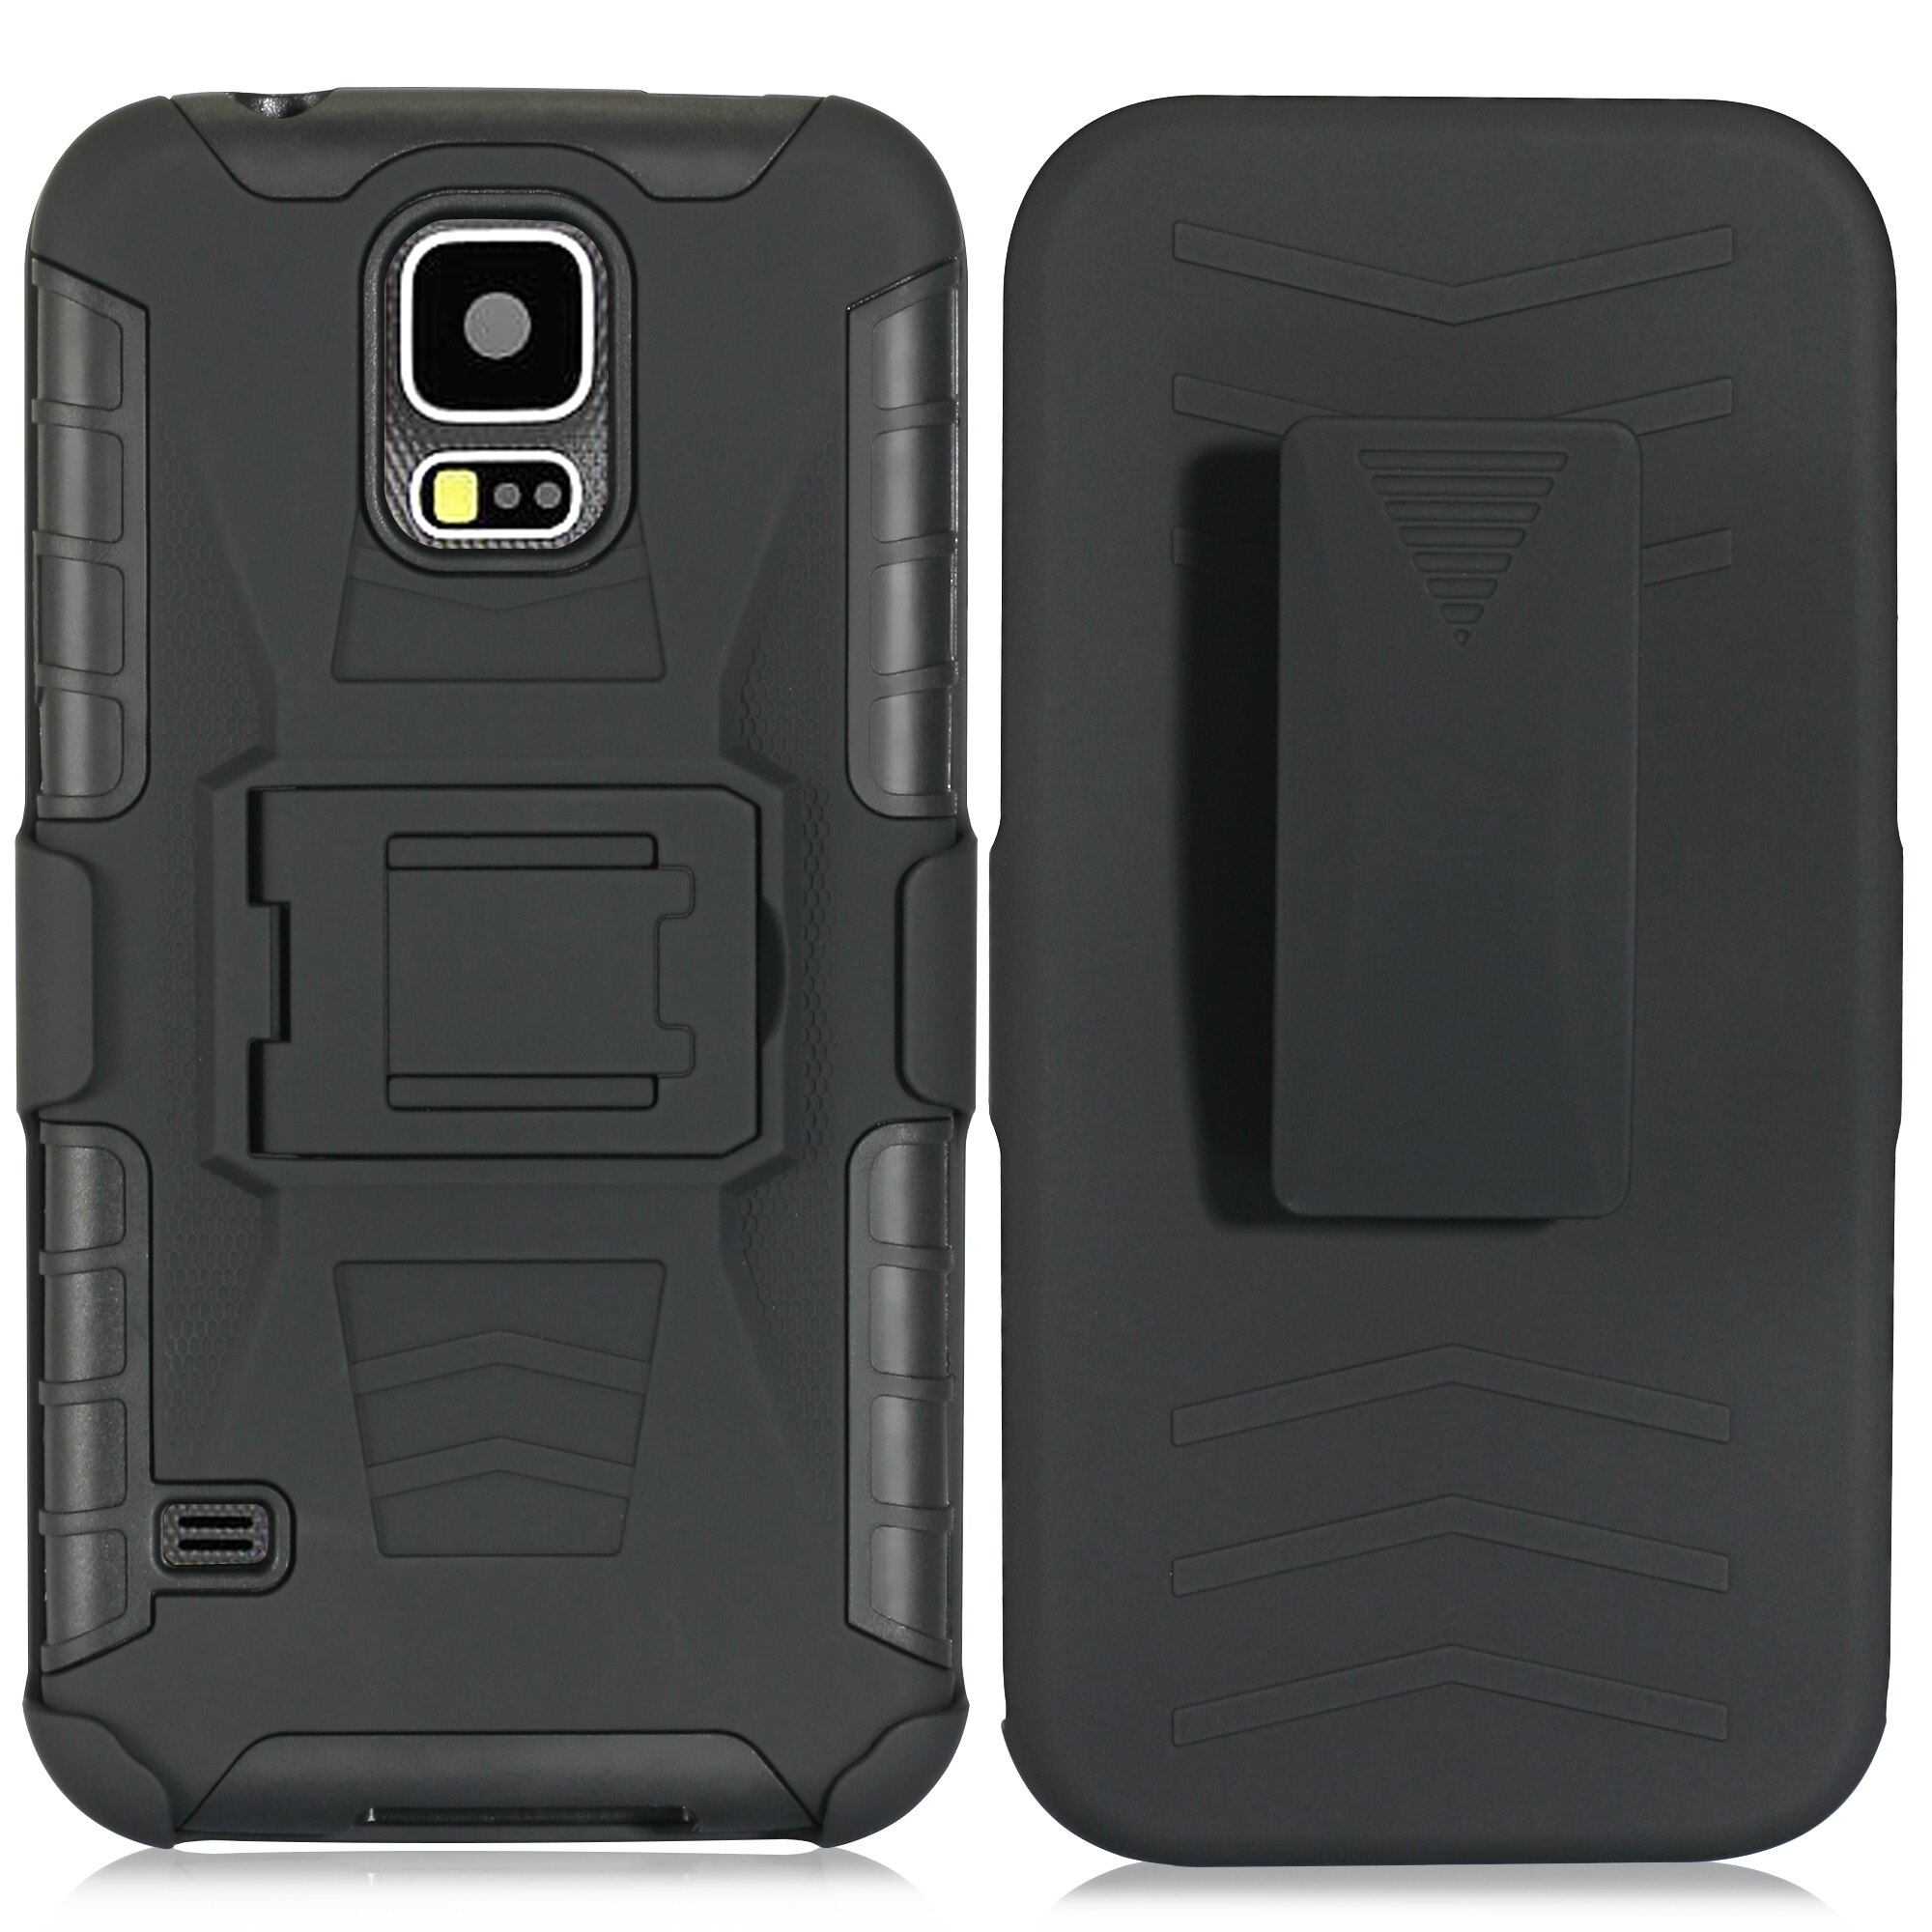 Zware Beschermende Armor Hard Case voor coque fundas Samsung Galaxy S5 Case Cover S5 SM-G900F + Riemclip Holster